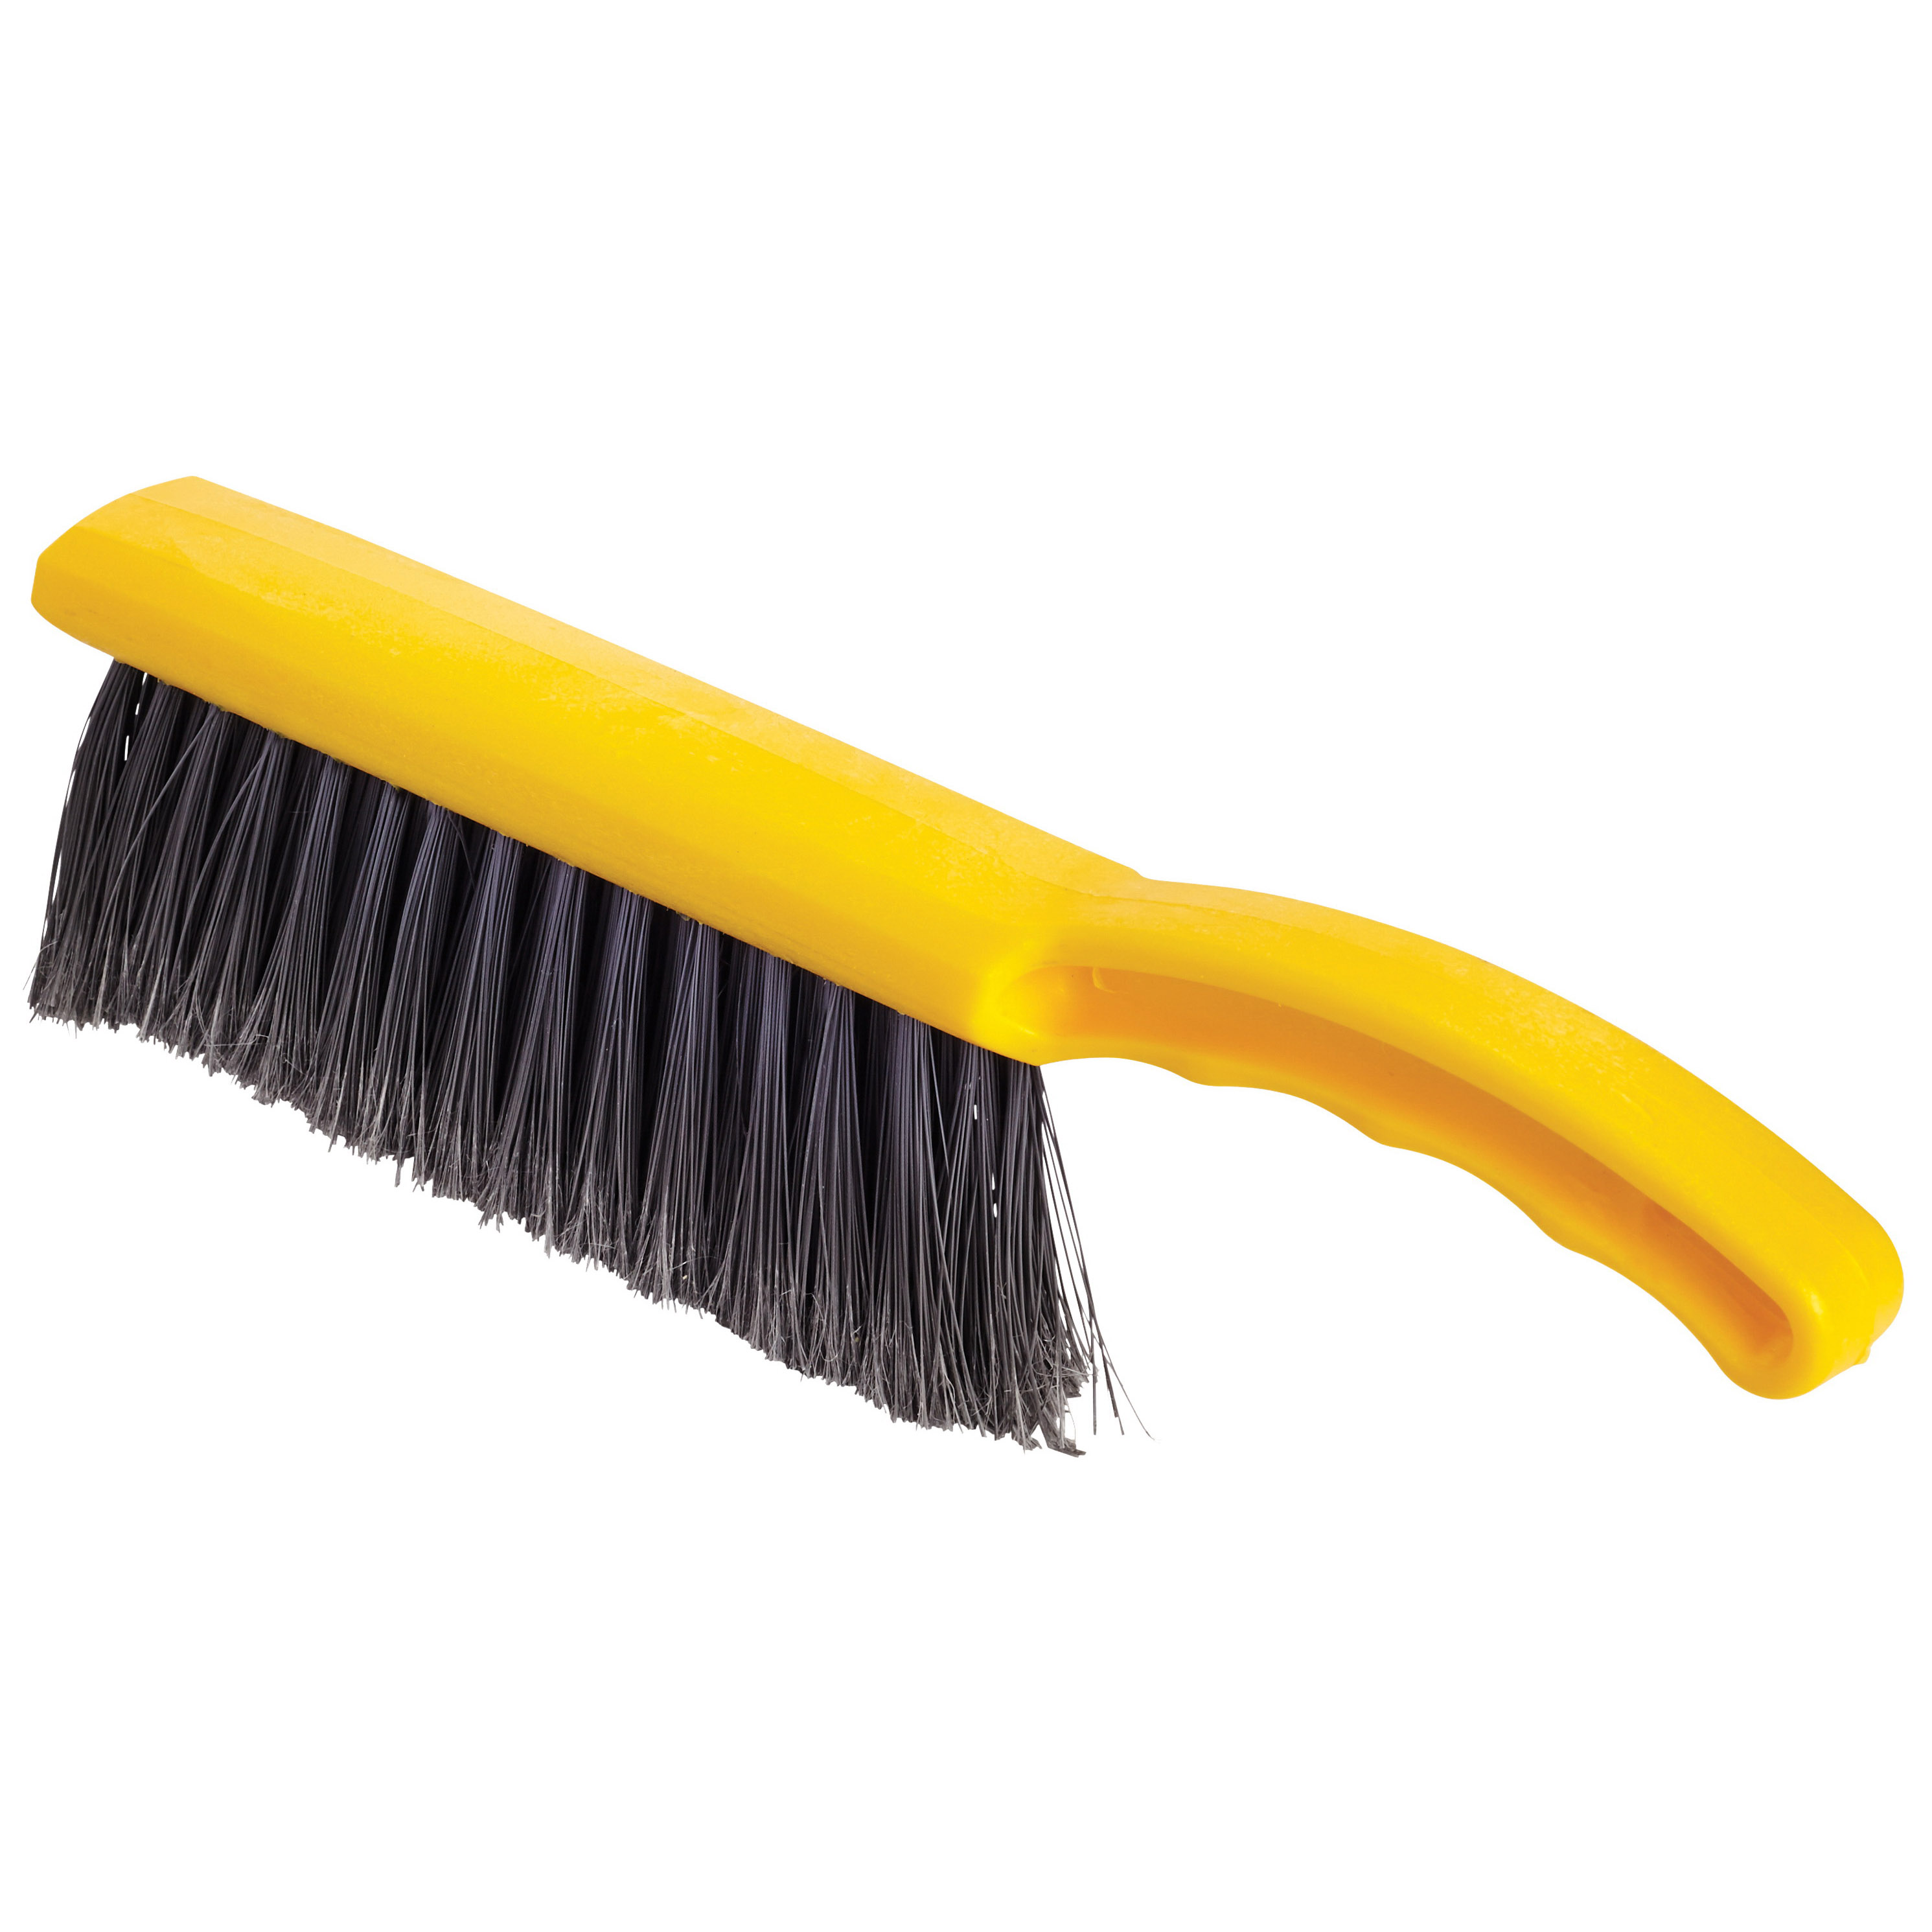 FG634200SILV Counter Brush, Silver Bristle, 12-1/2 in OAL, Yellow Handle